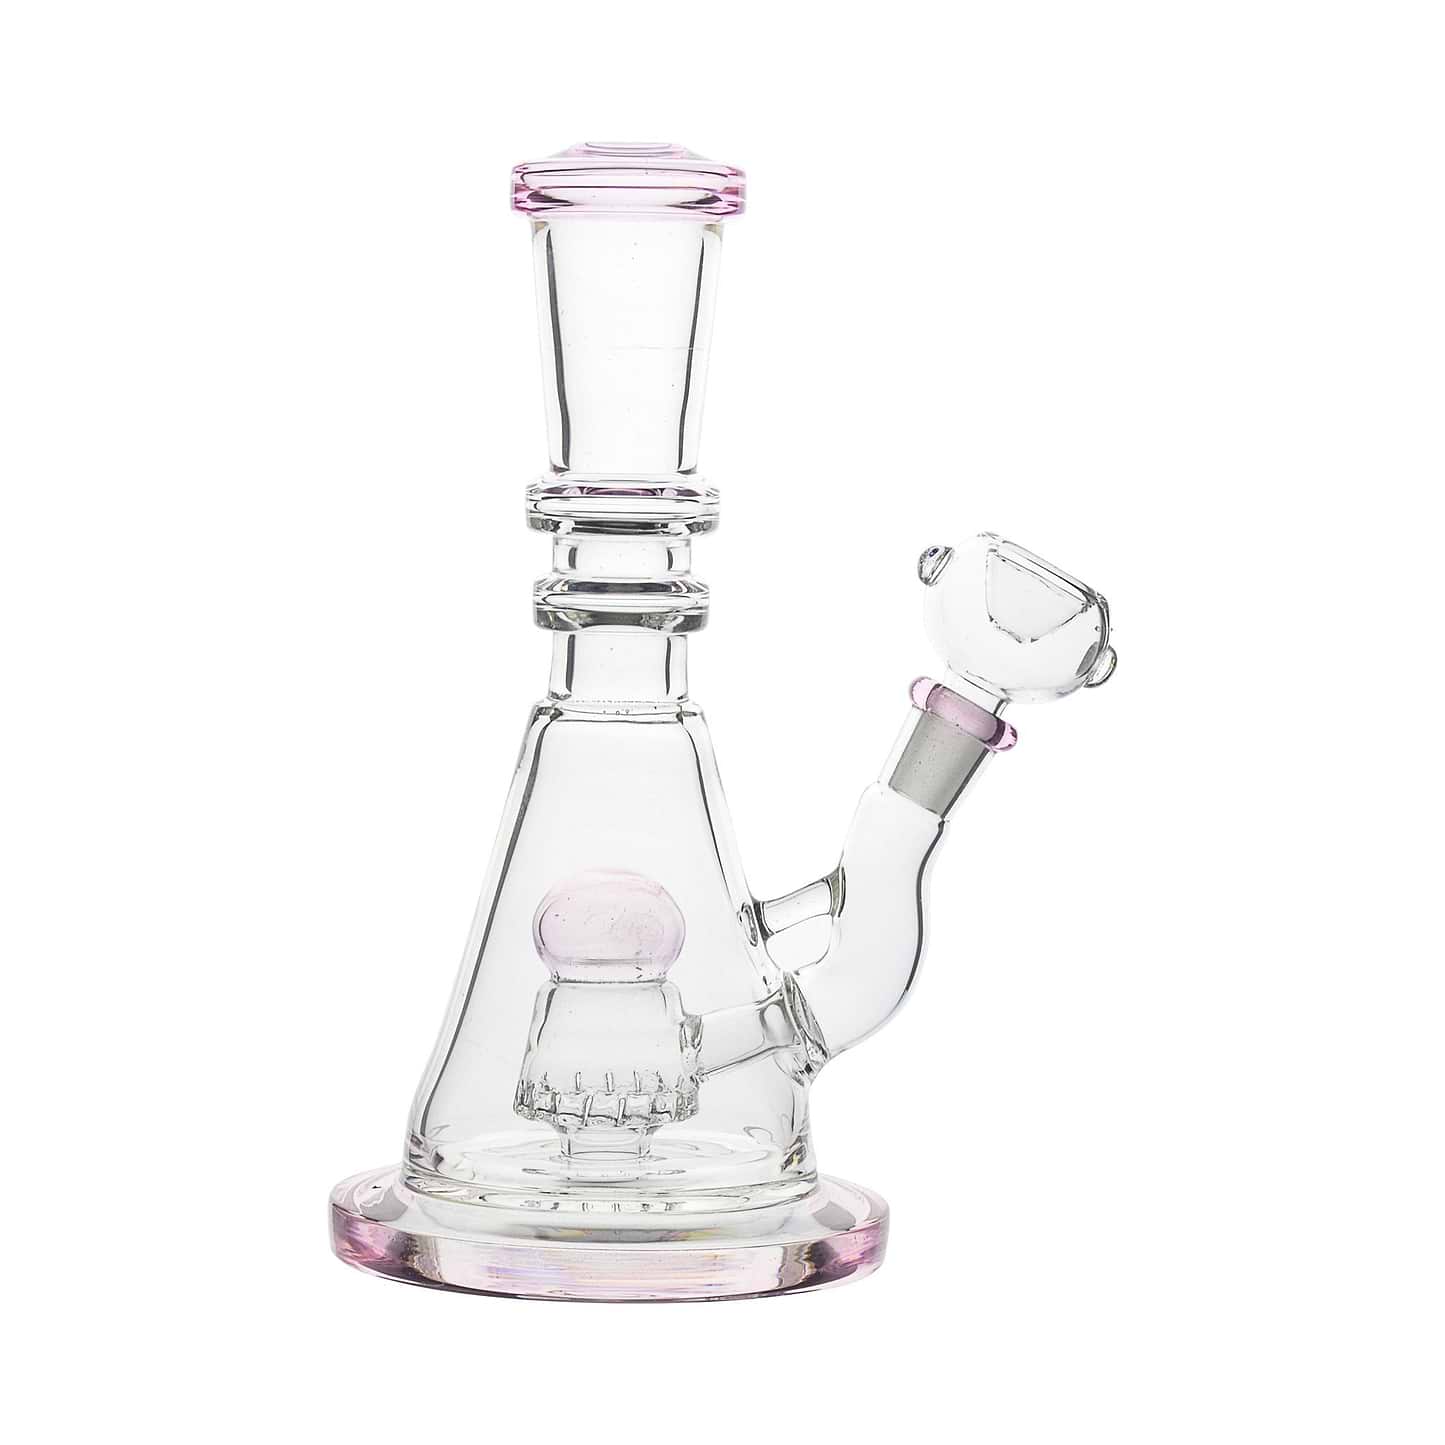 11-inch pink-tinged glass bong percolated beaker smoking device splashguards pink orb crystal jellyfish look